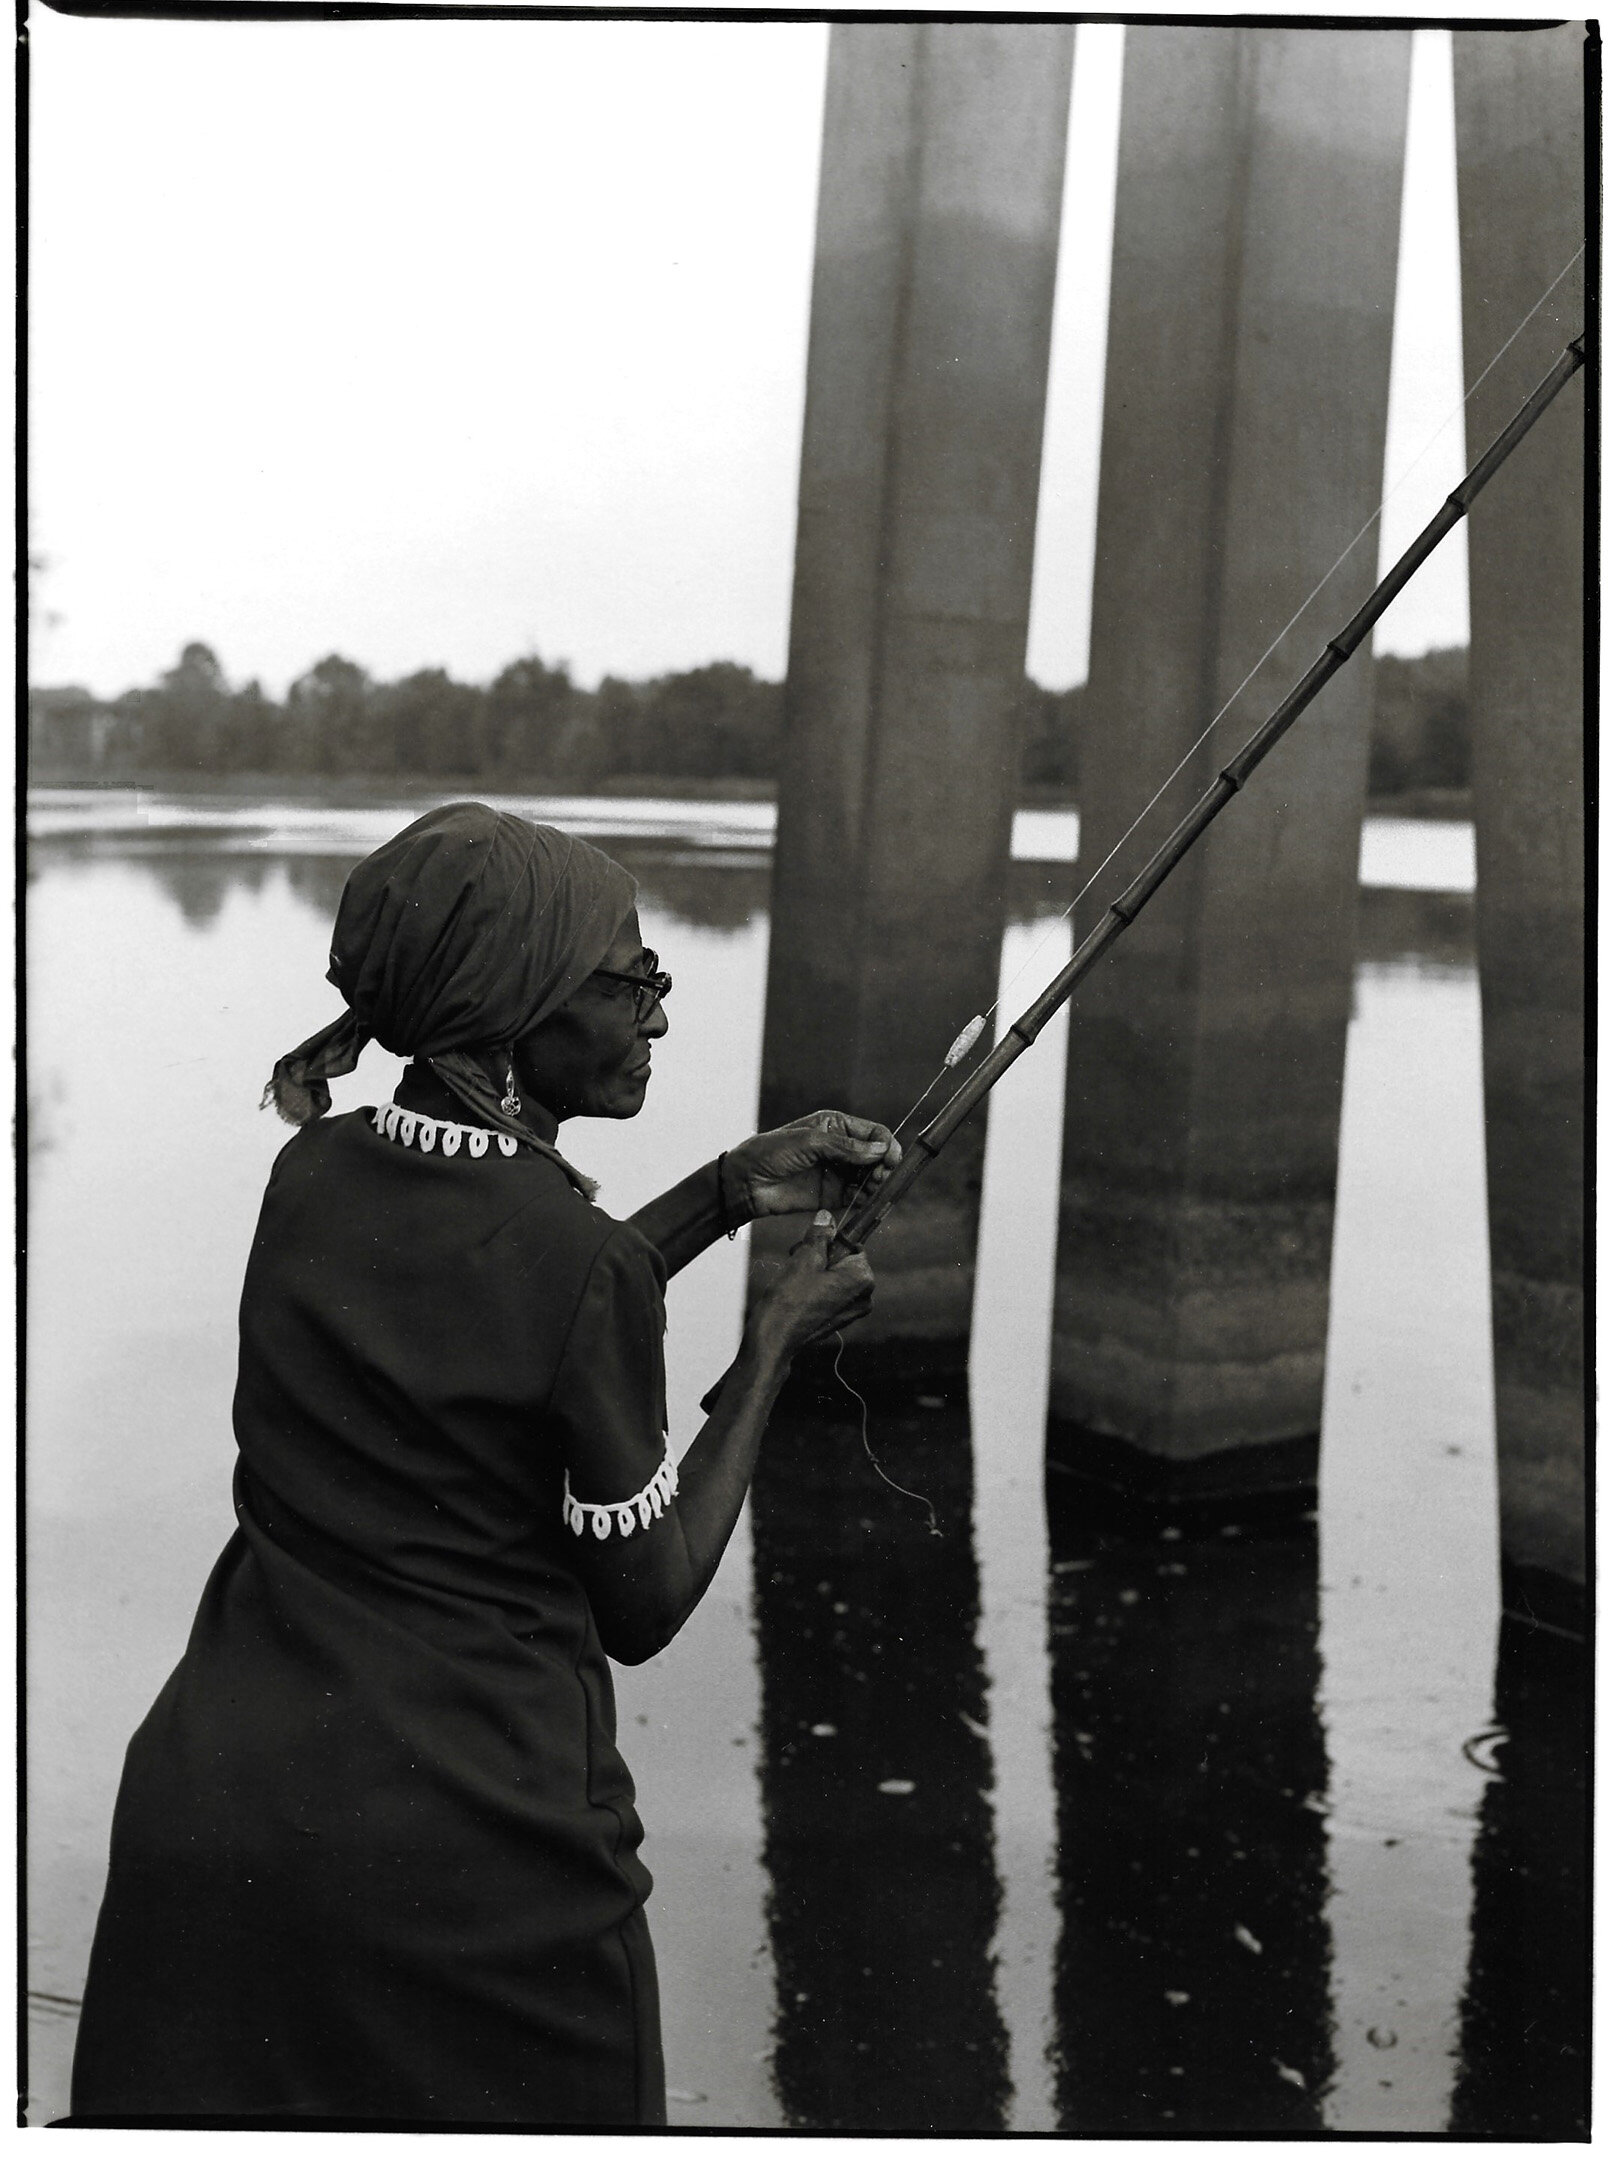   Fishing Under the Trestle, Cheney Griffin Park, Bainbridge, GA  Image: 1980/printed: 2020 Gelatin silver print 11 3⁄4 x 8 3⁄4 in. (image size)   The Do Good Fund, Inc., 2020-066 